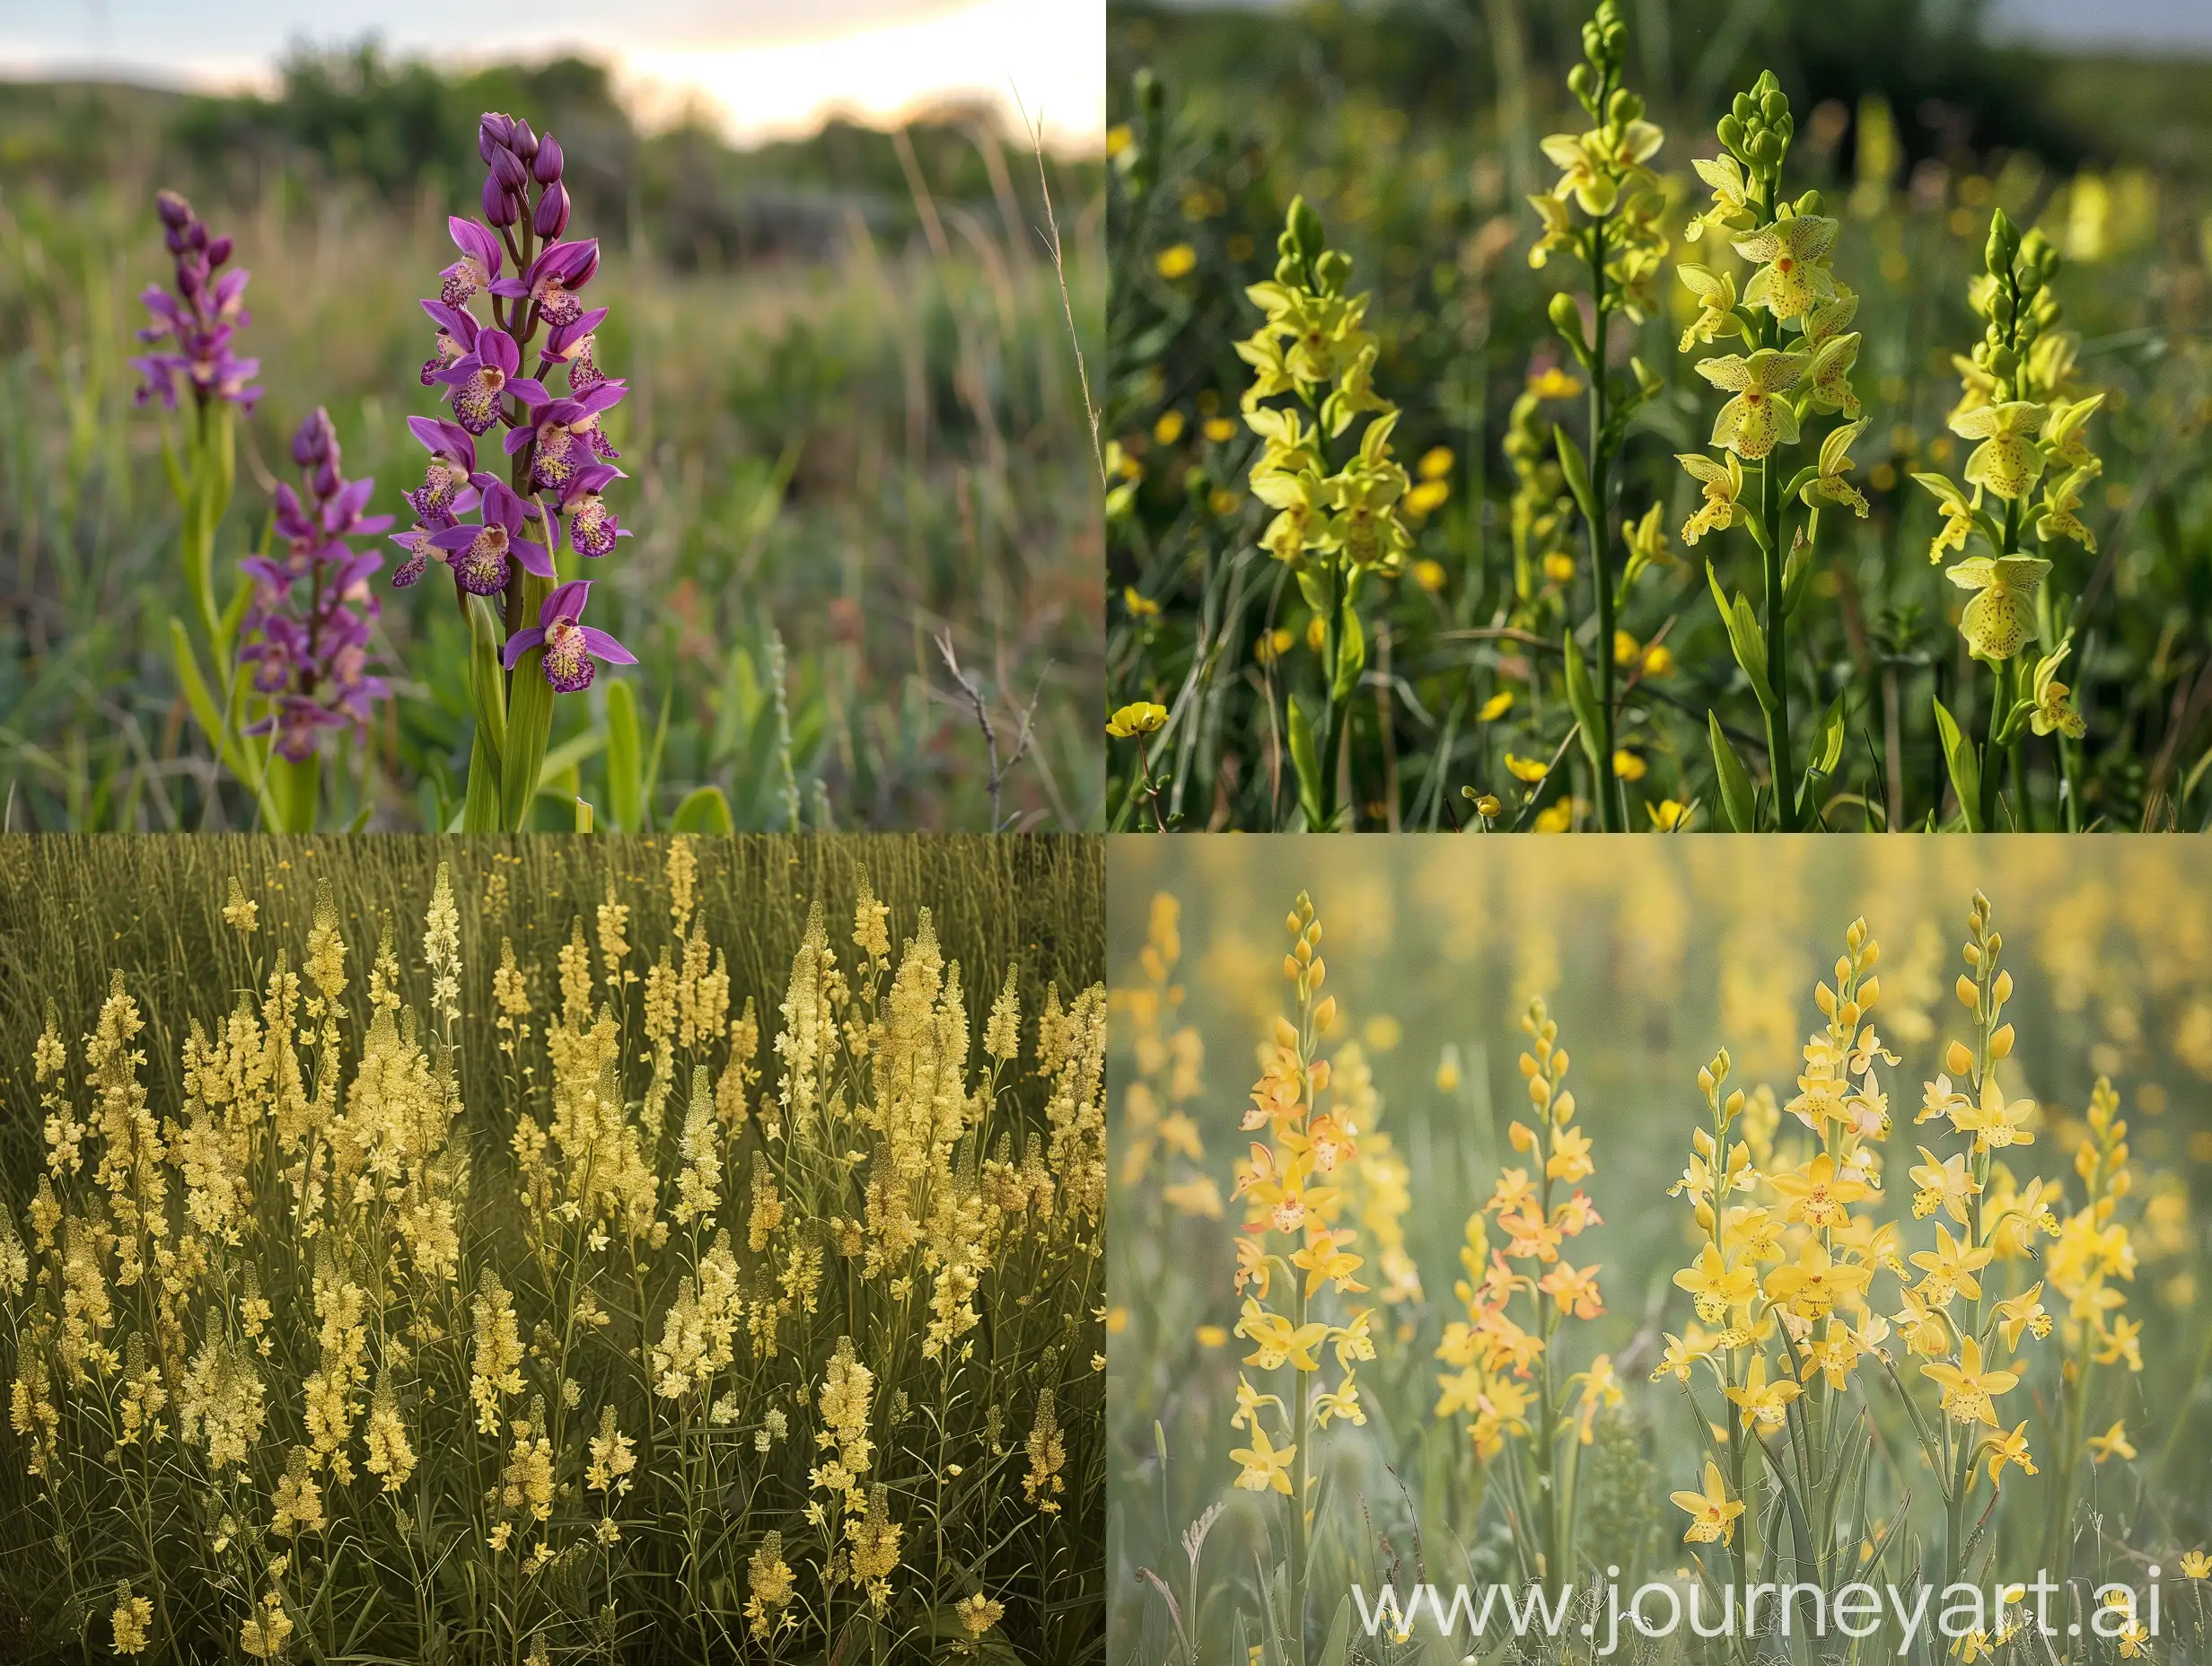 Vibrant-Willow-Orchids-Landscape-in-43-Aspect-Ratio